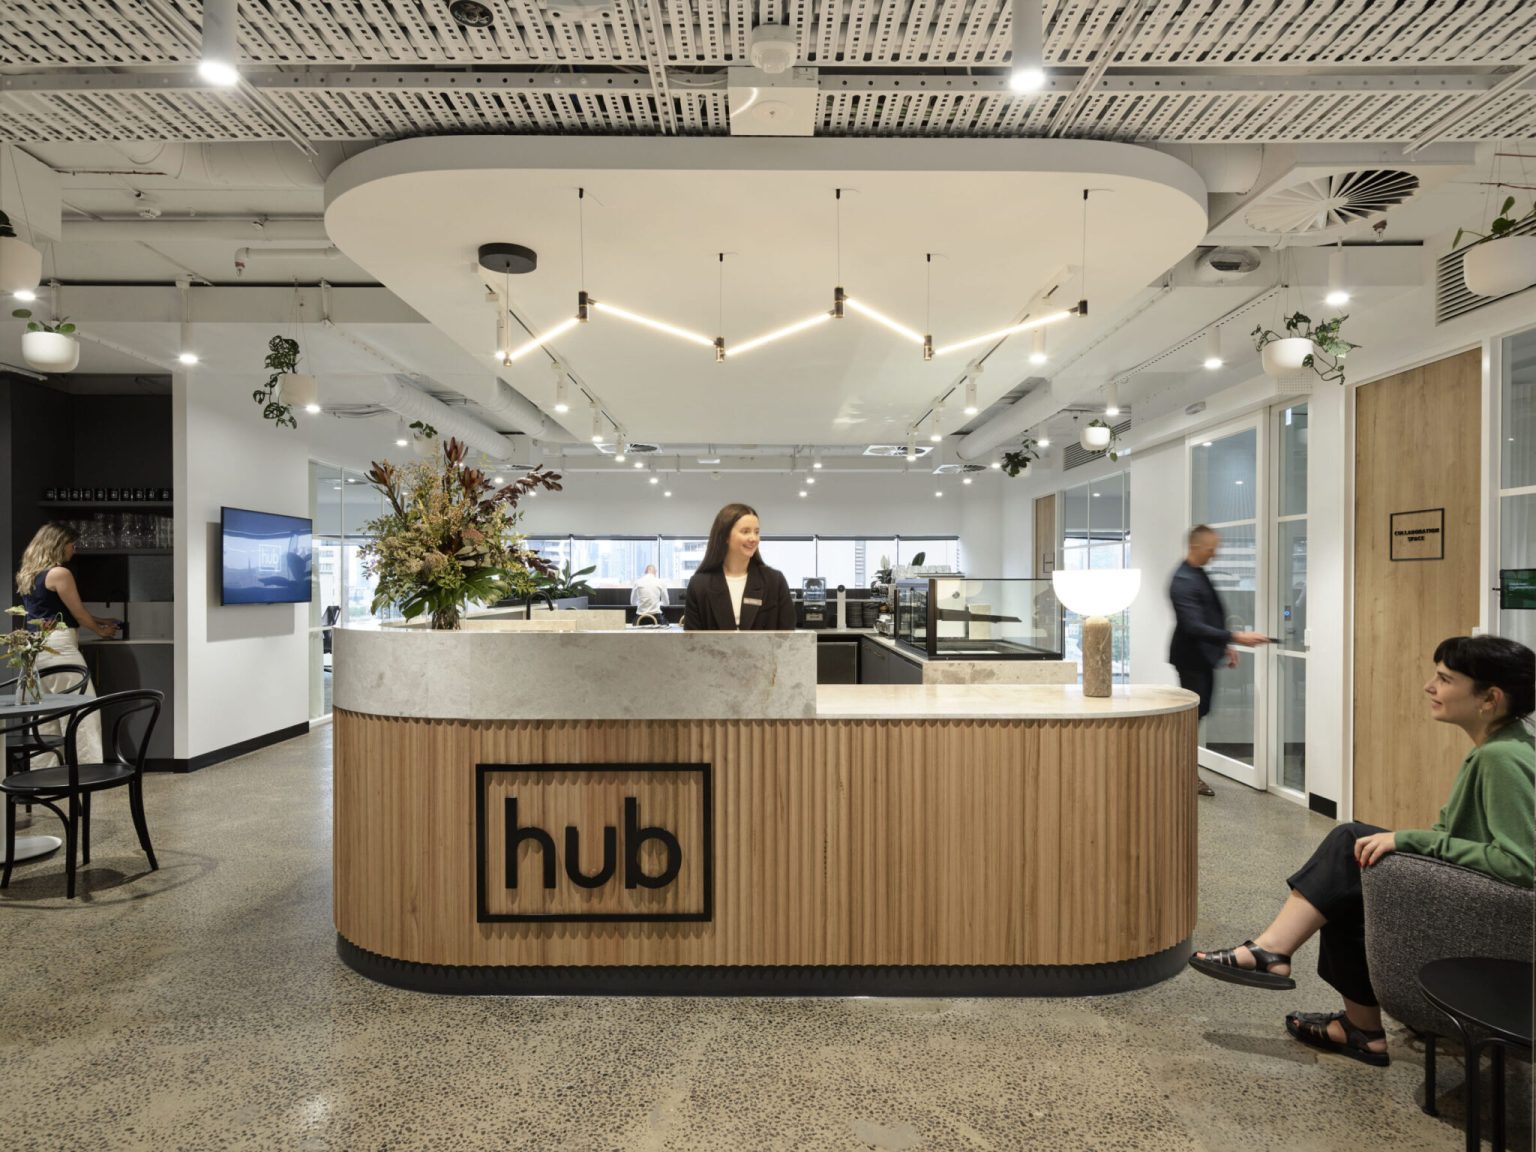 the hub